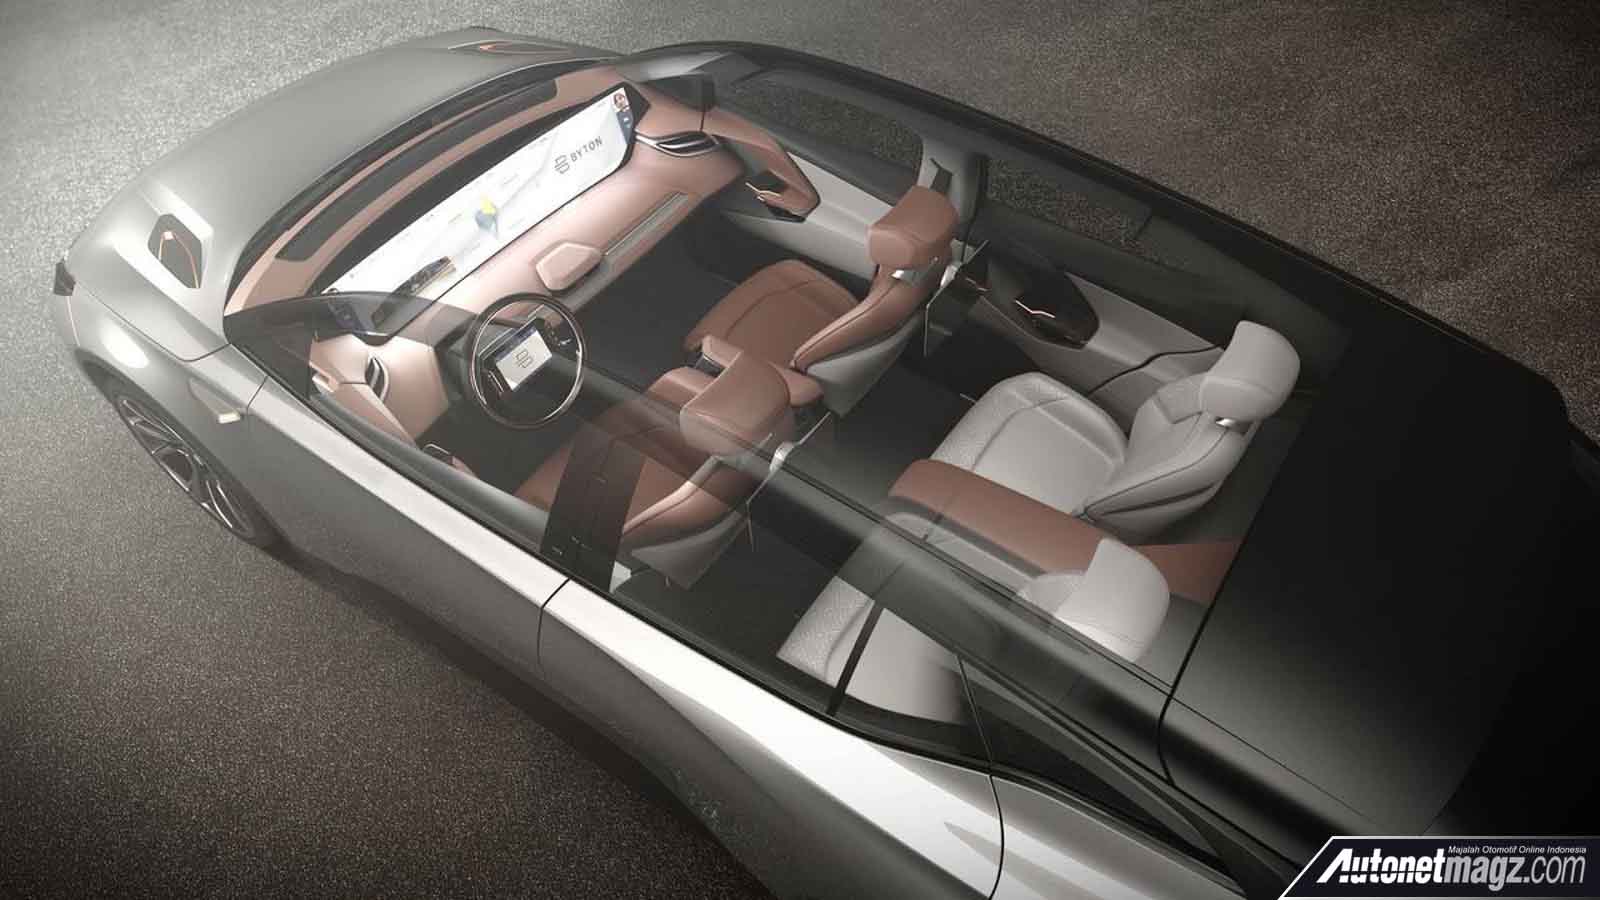 Berita, interior Crossover Byton 2019: Byton Pamerkan Mobil Listrik Konsep Dengan Sistem Autonomous